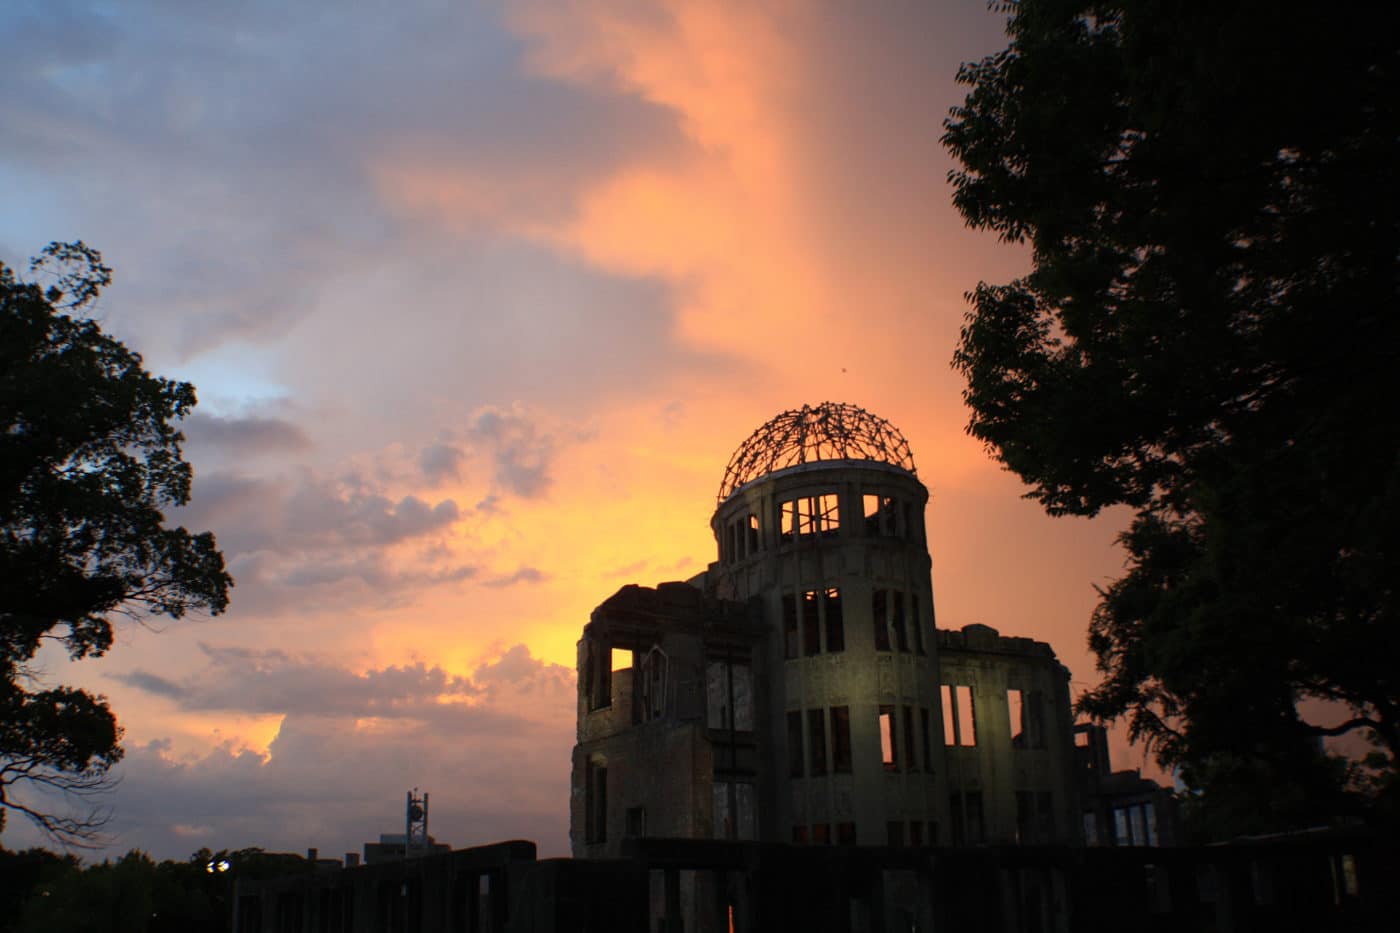 Hiroshima dome with sunset